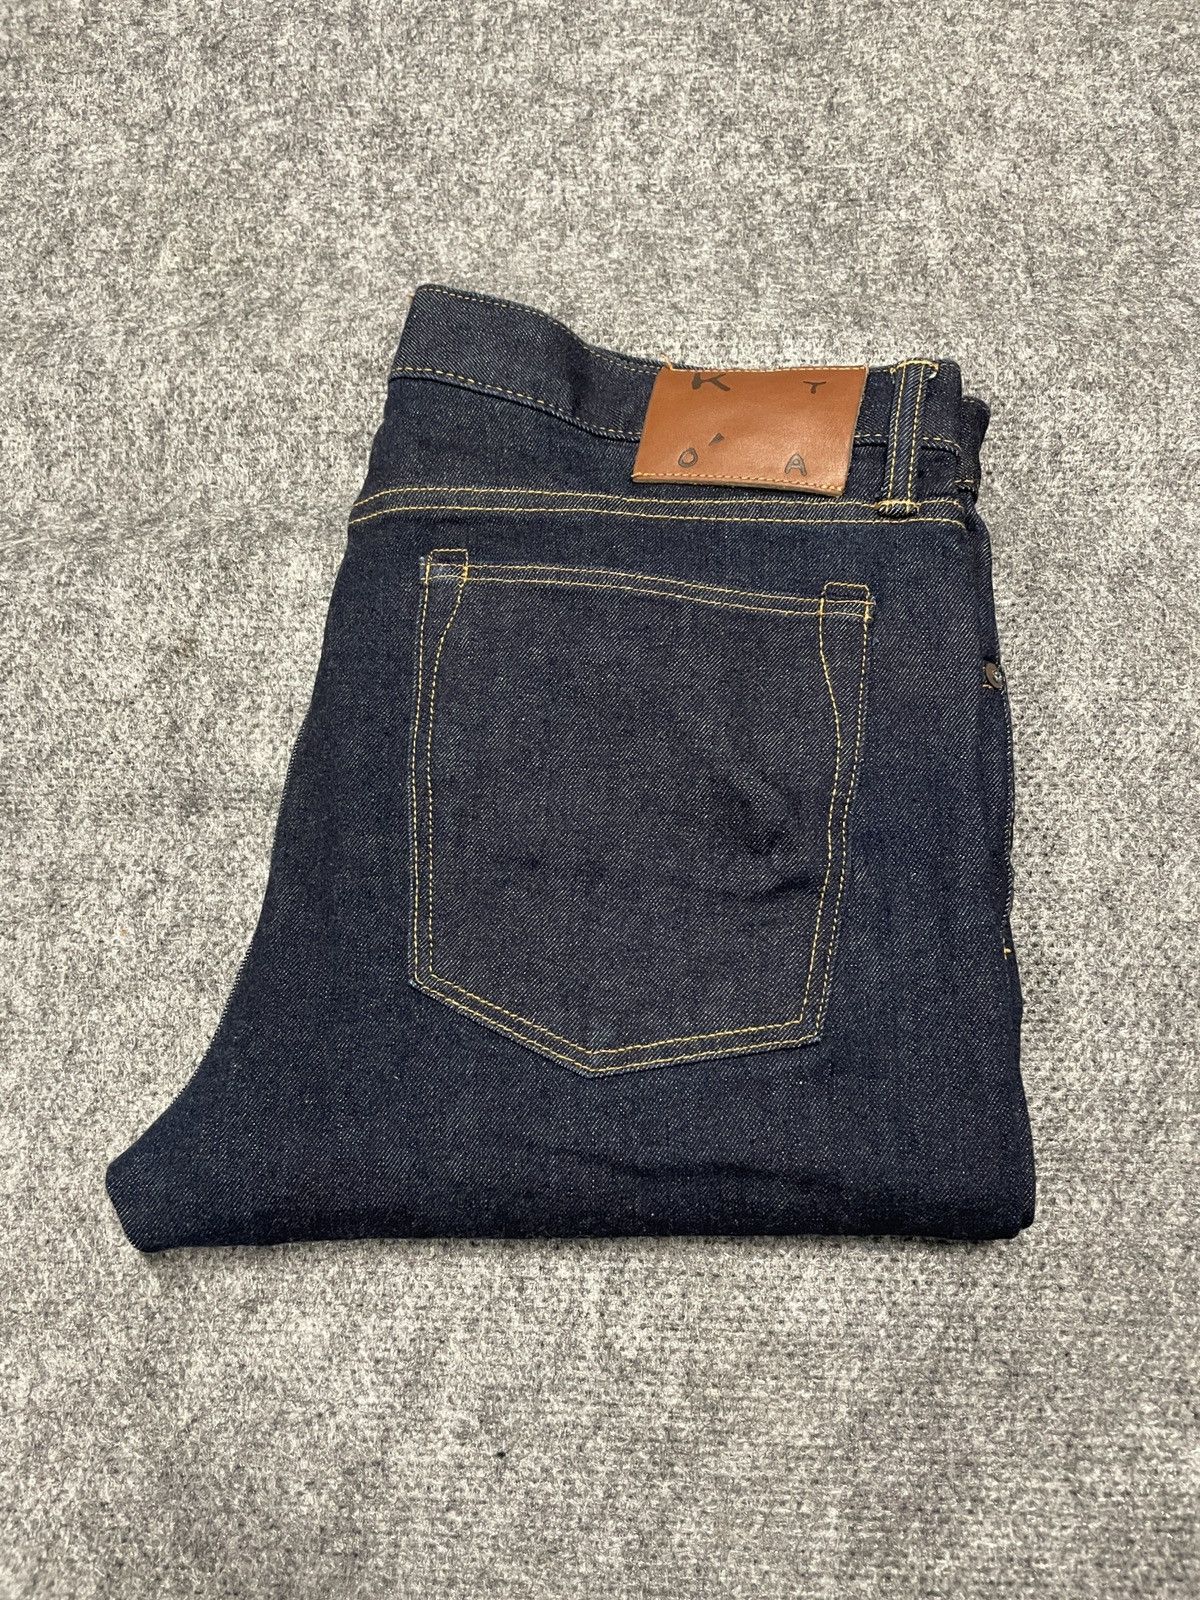 Kato Kato Selvedge Pen Slim Fit Jeans Mens 36x31 Indigo USA Made | Grailed